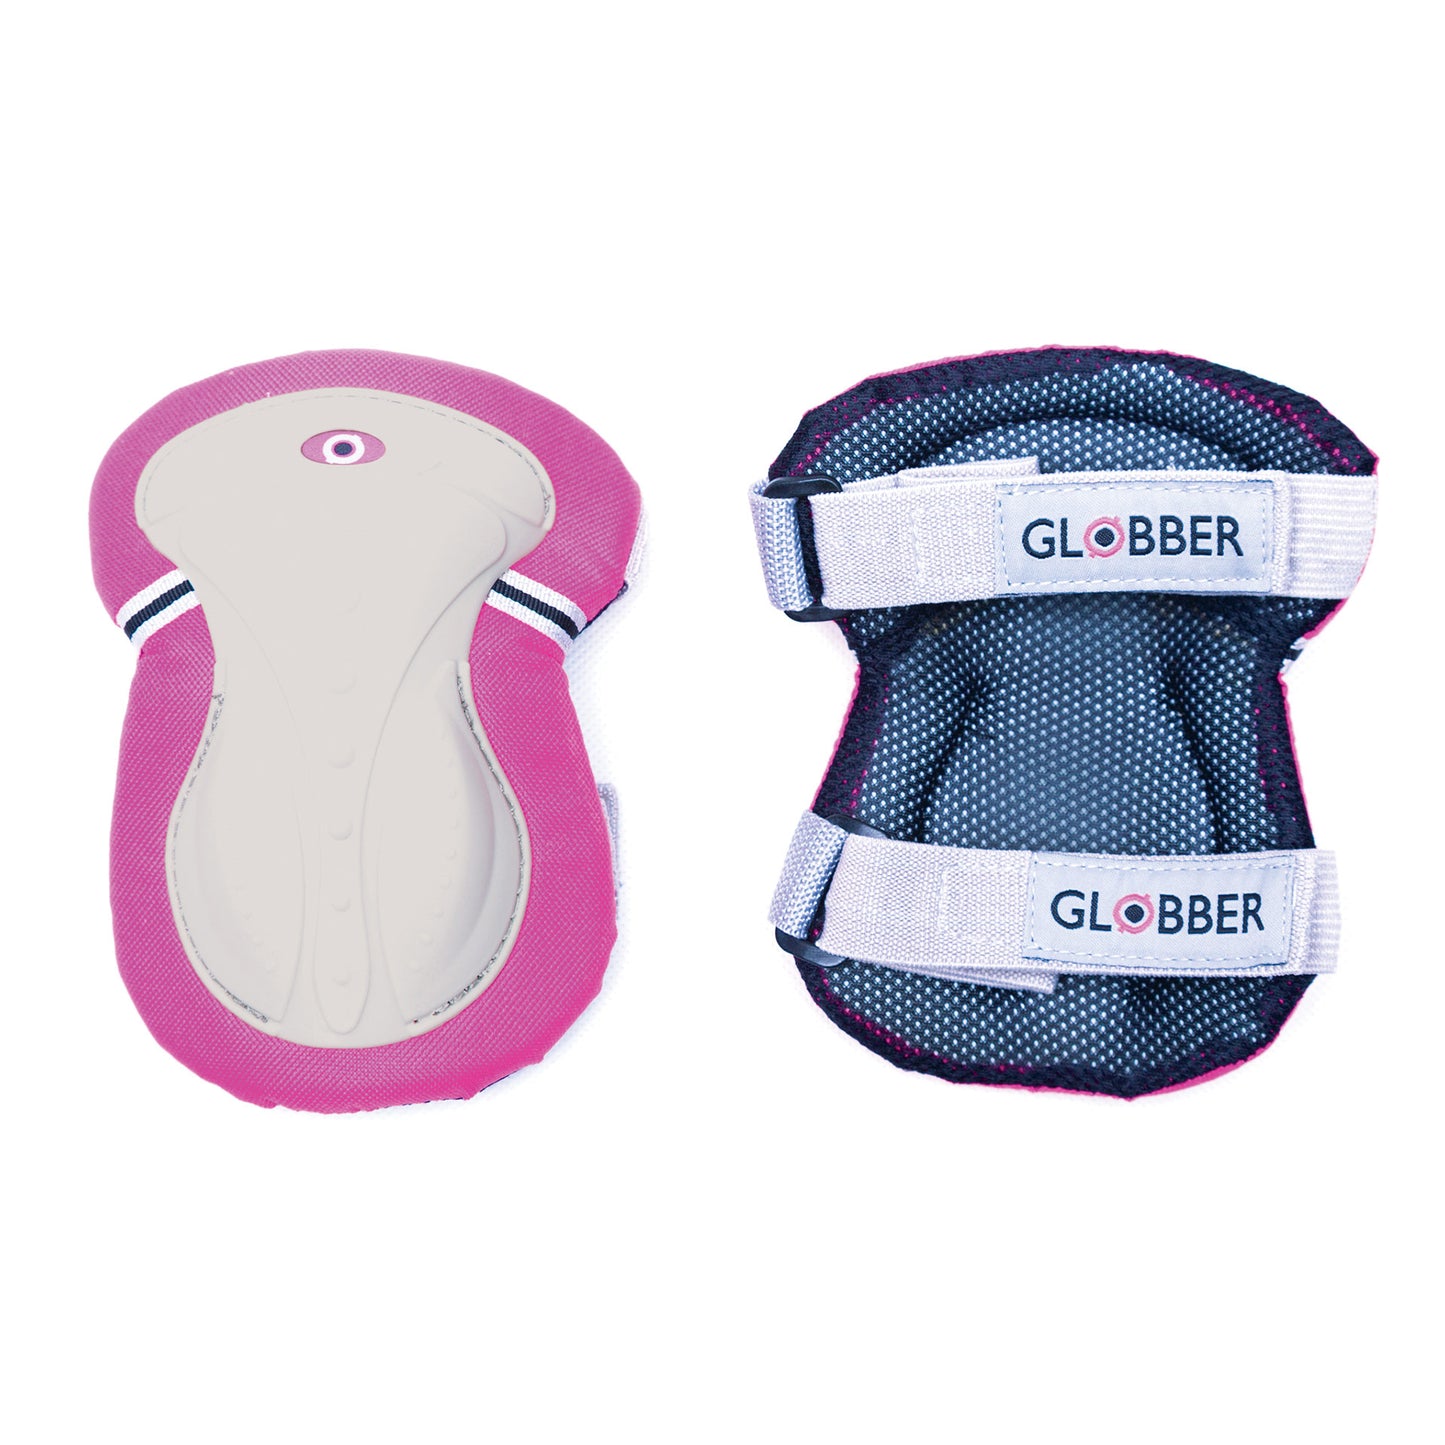 Globber Kids Protective Gear 3 in 1 Set 兒童關節保護墊套裝